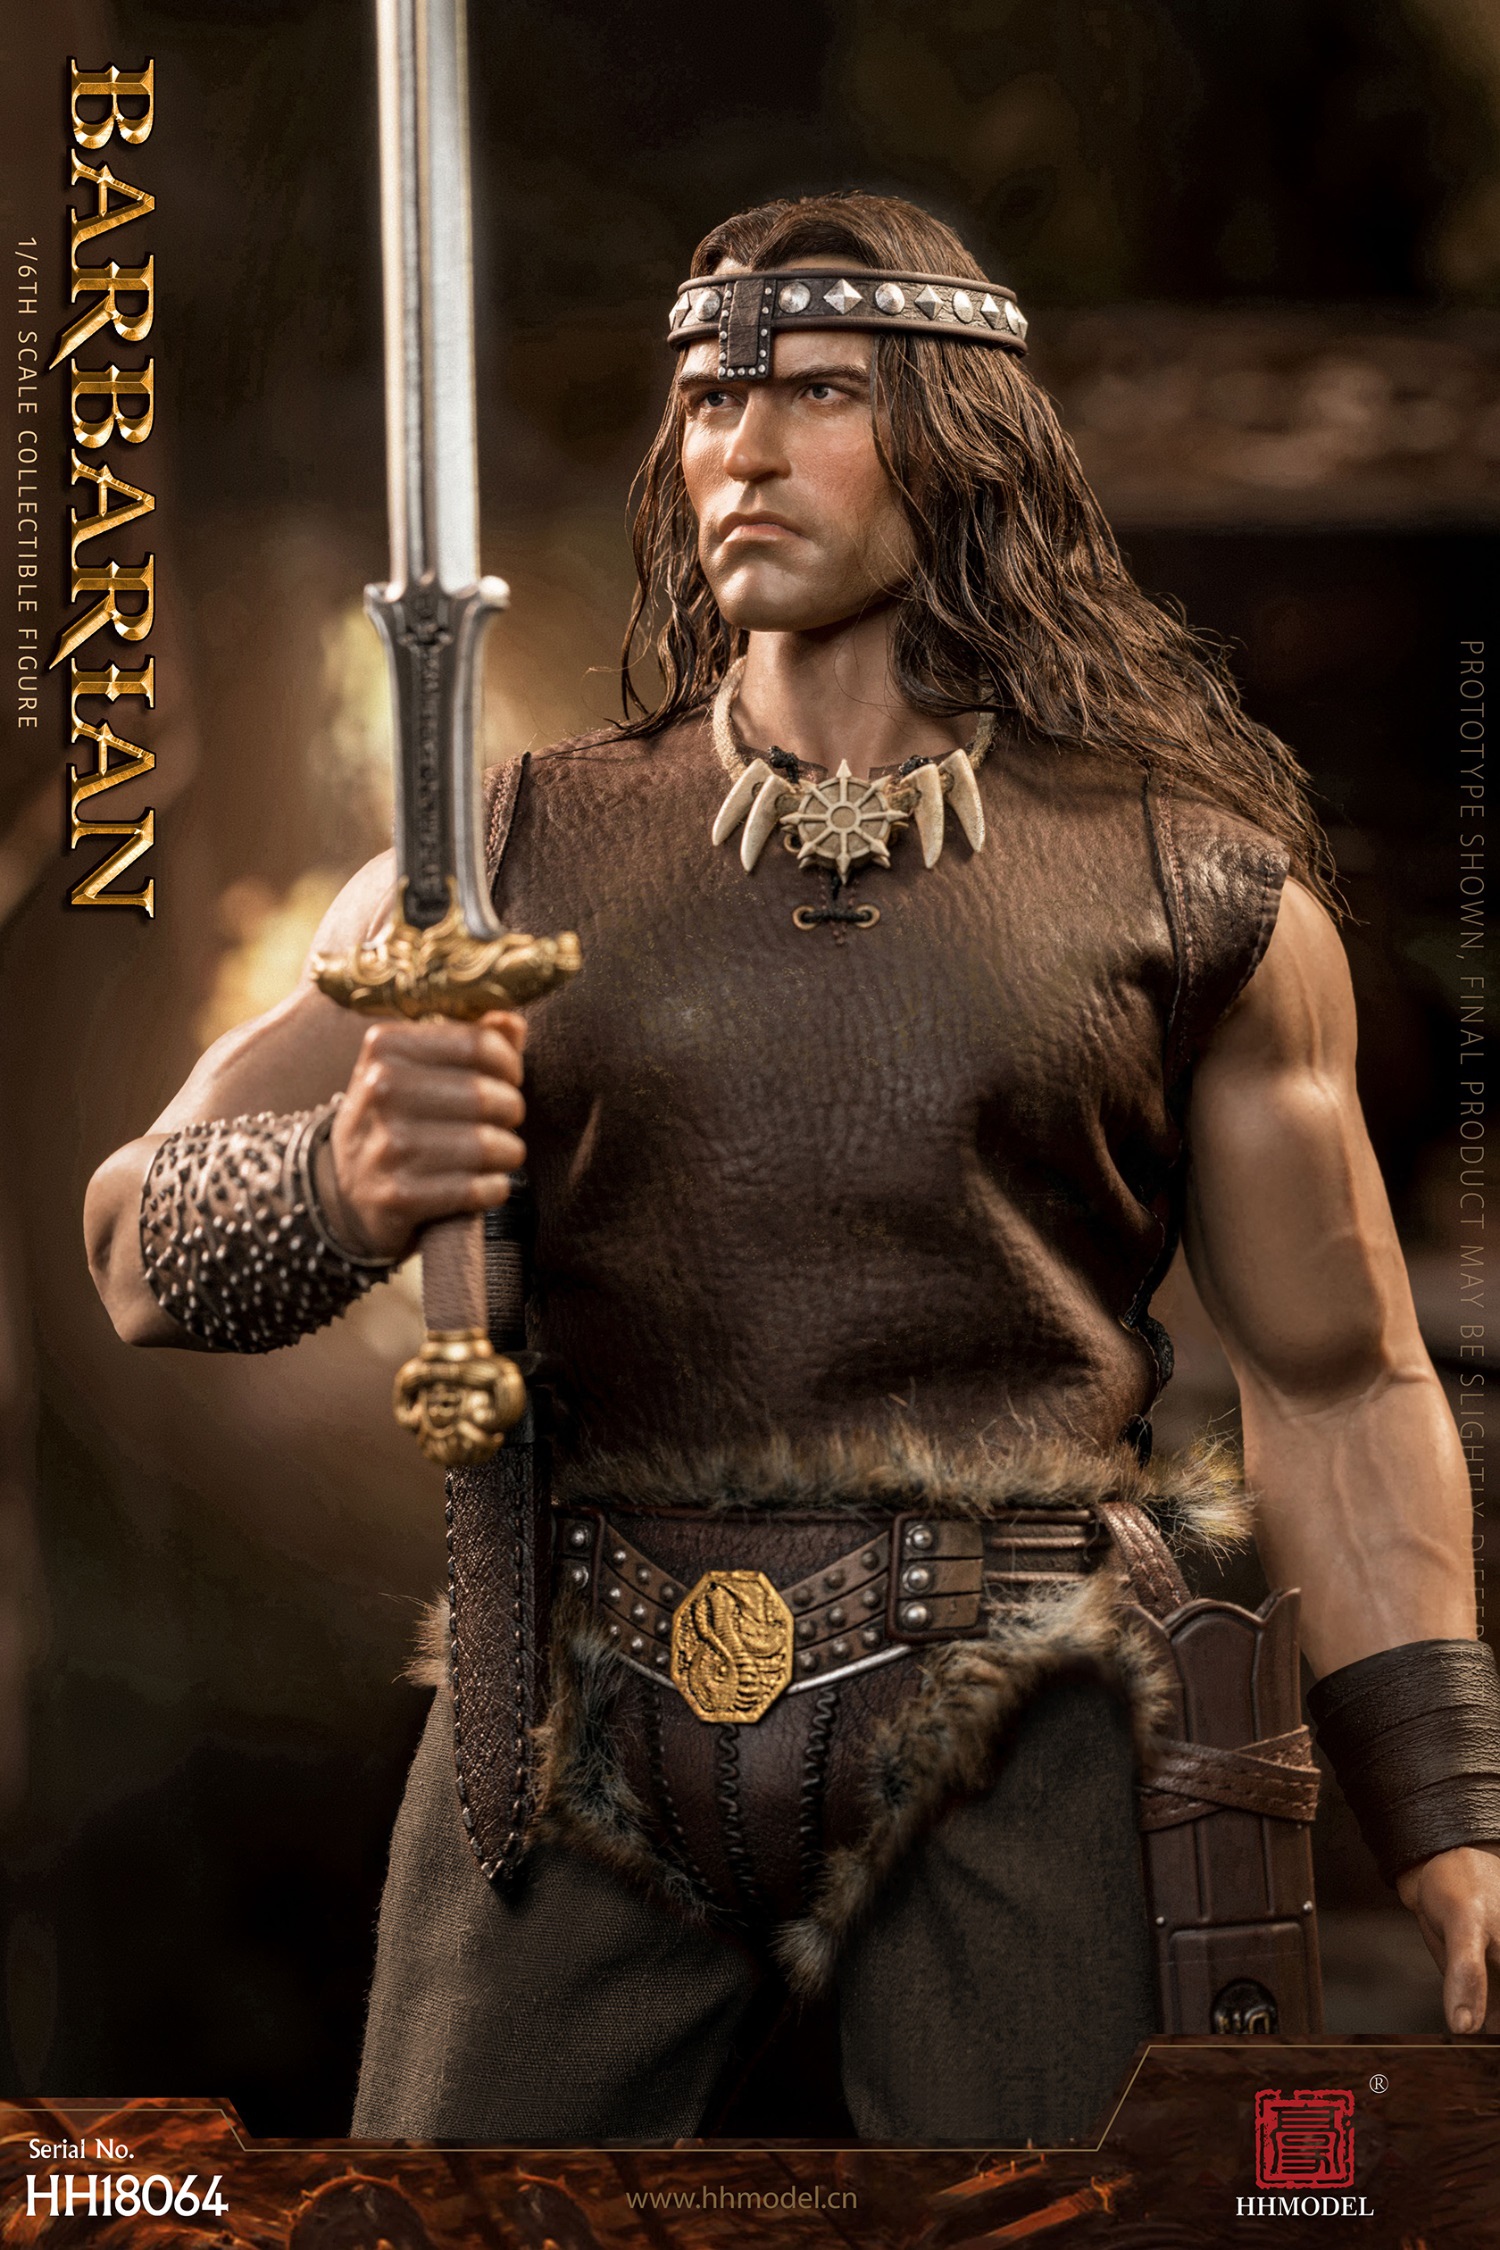 Conan the Barbarian - Imperial Legion